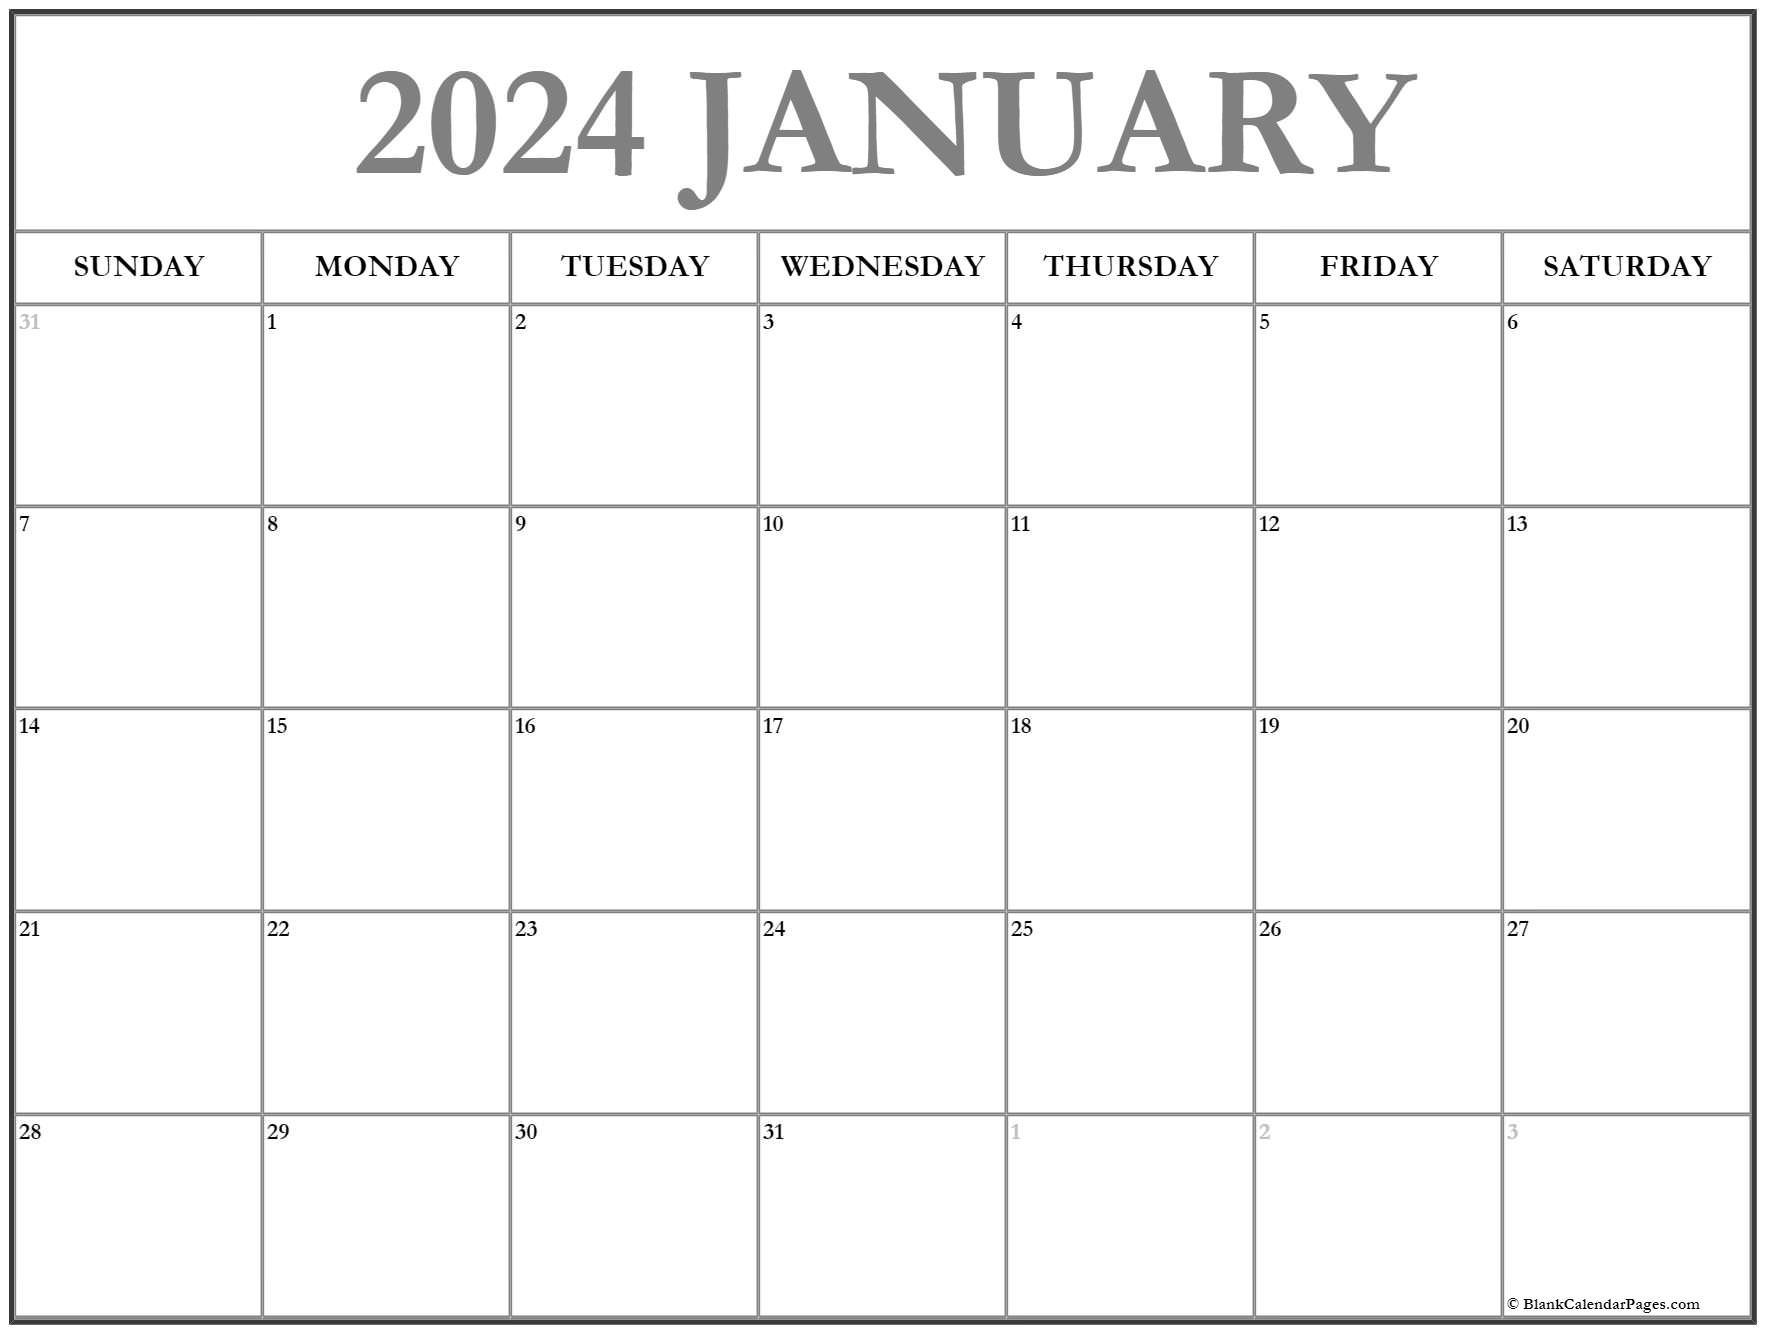 january-2024-table-calendar-new-the-best-list-of-january-2024